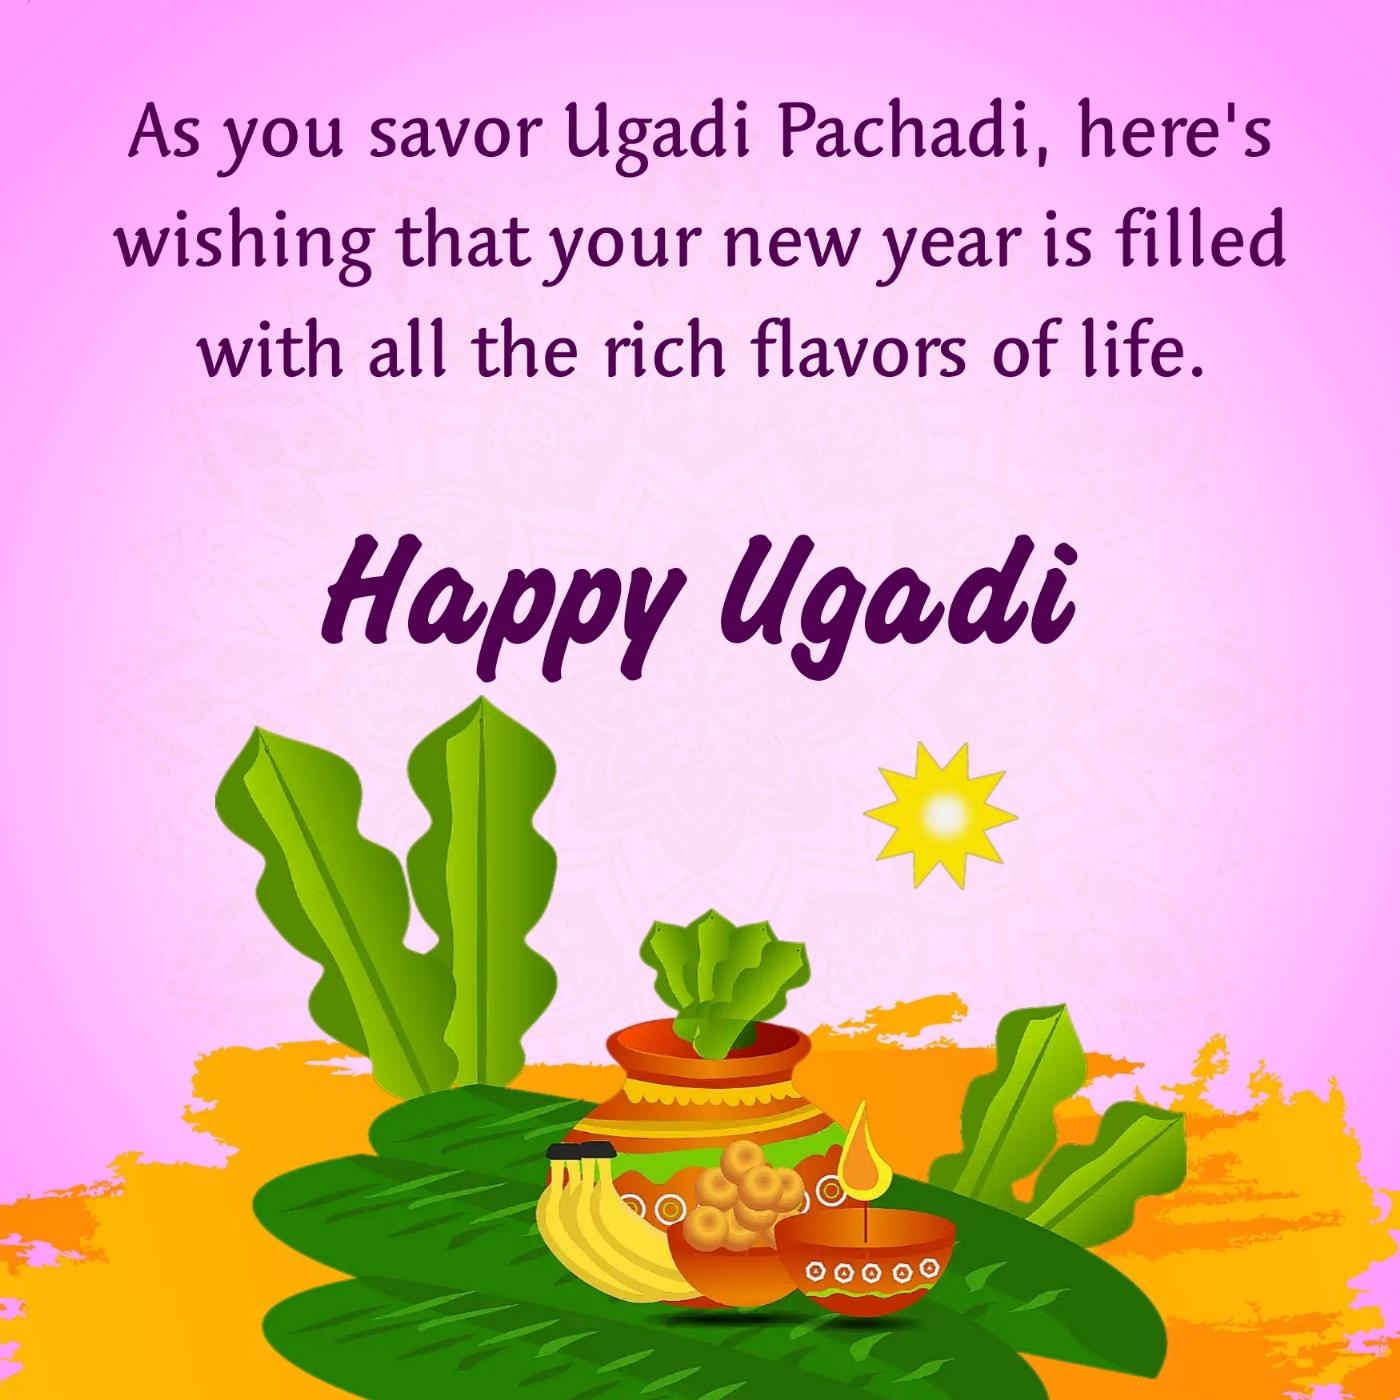 As you savor Ugadi Pachadi here's wishing that